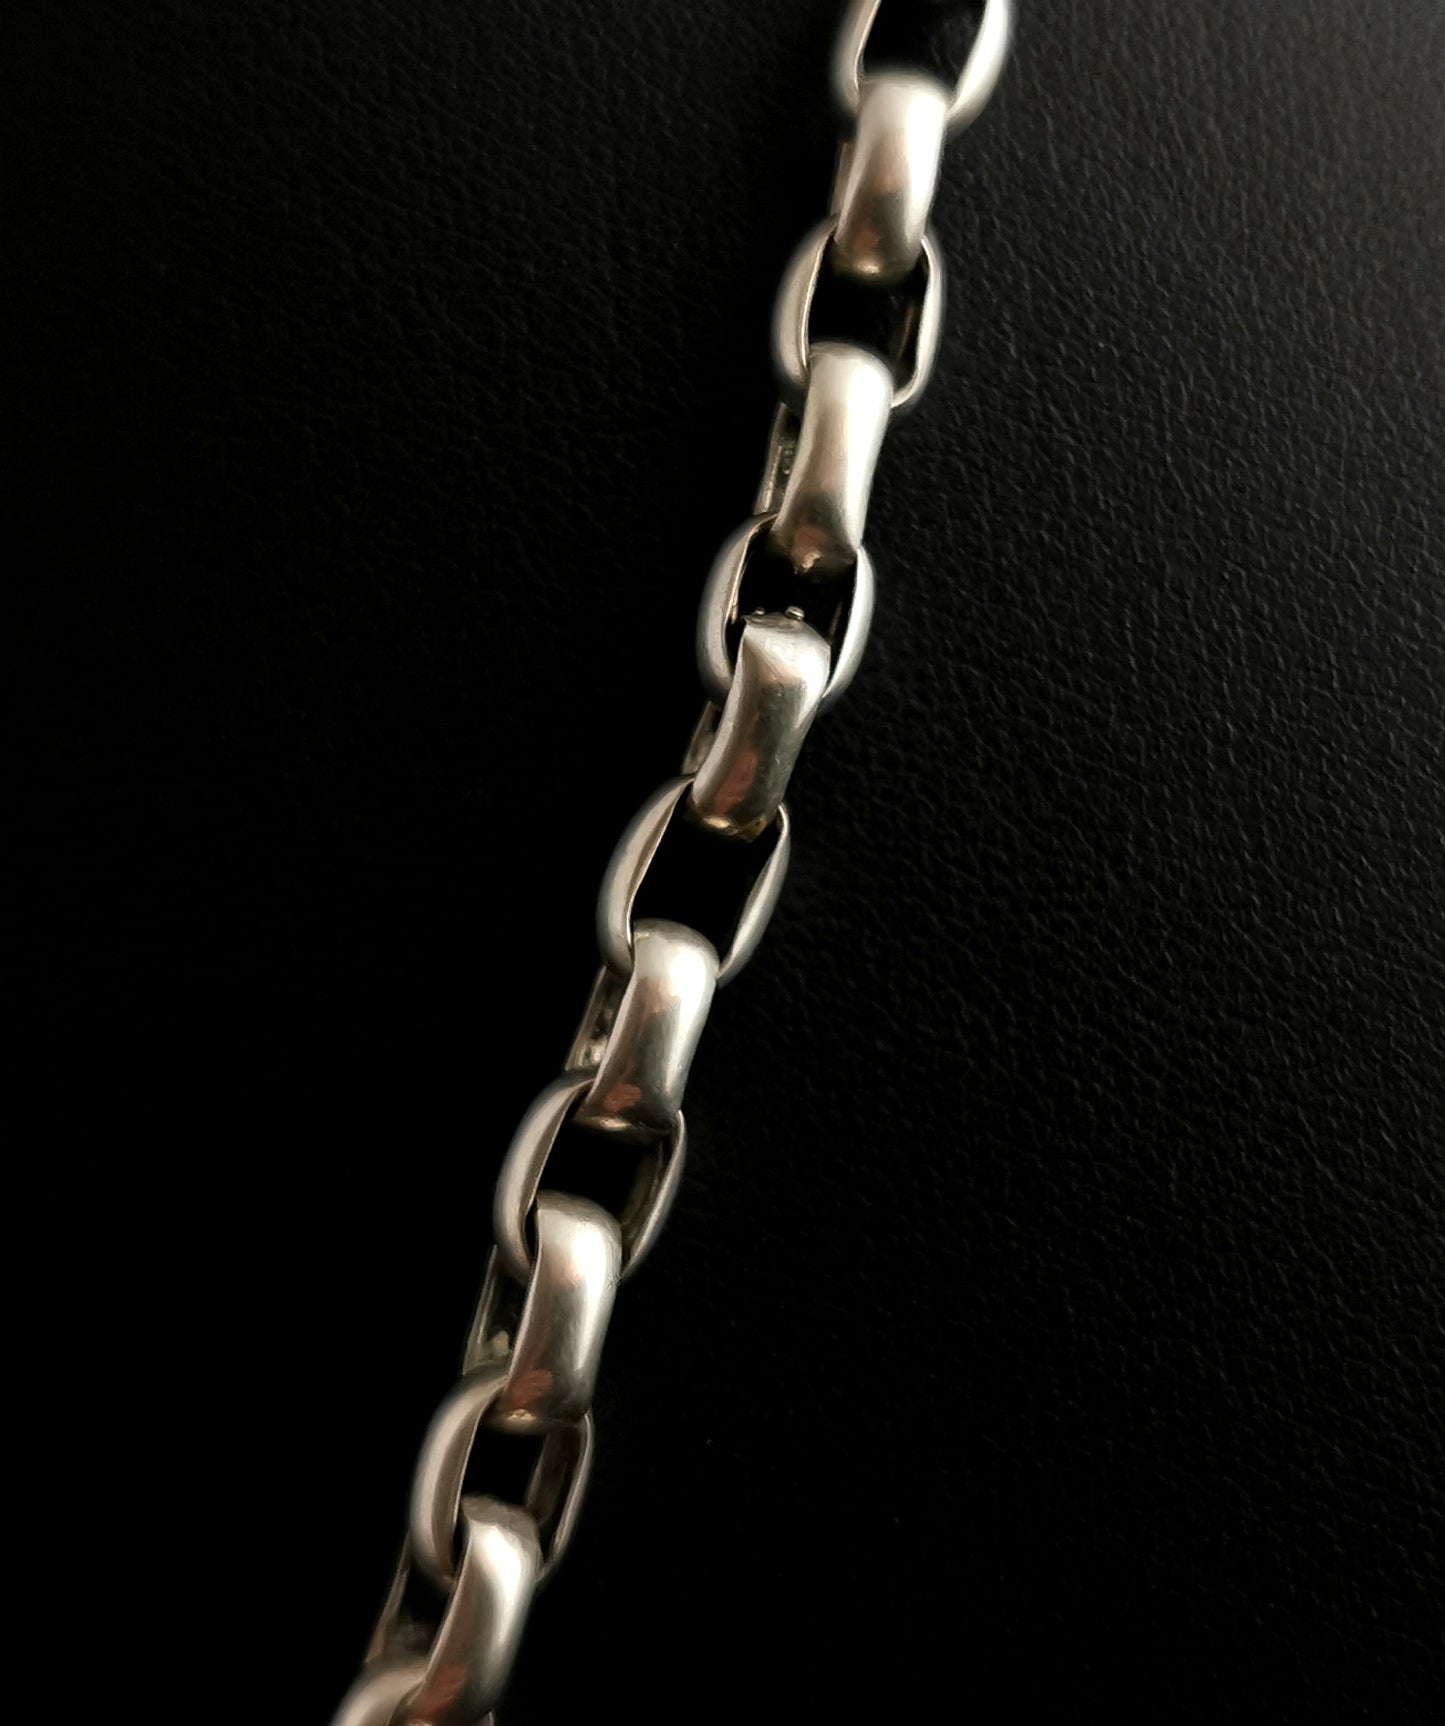 Antique silver horse seal fob pendant, Belcher link long chain necklace, Bloodstone